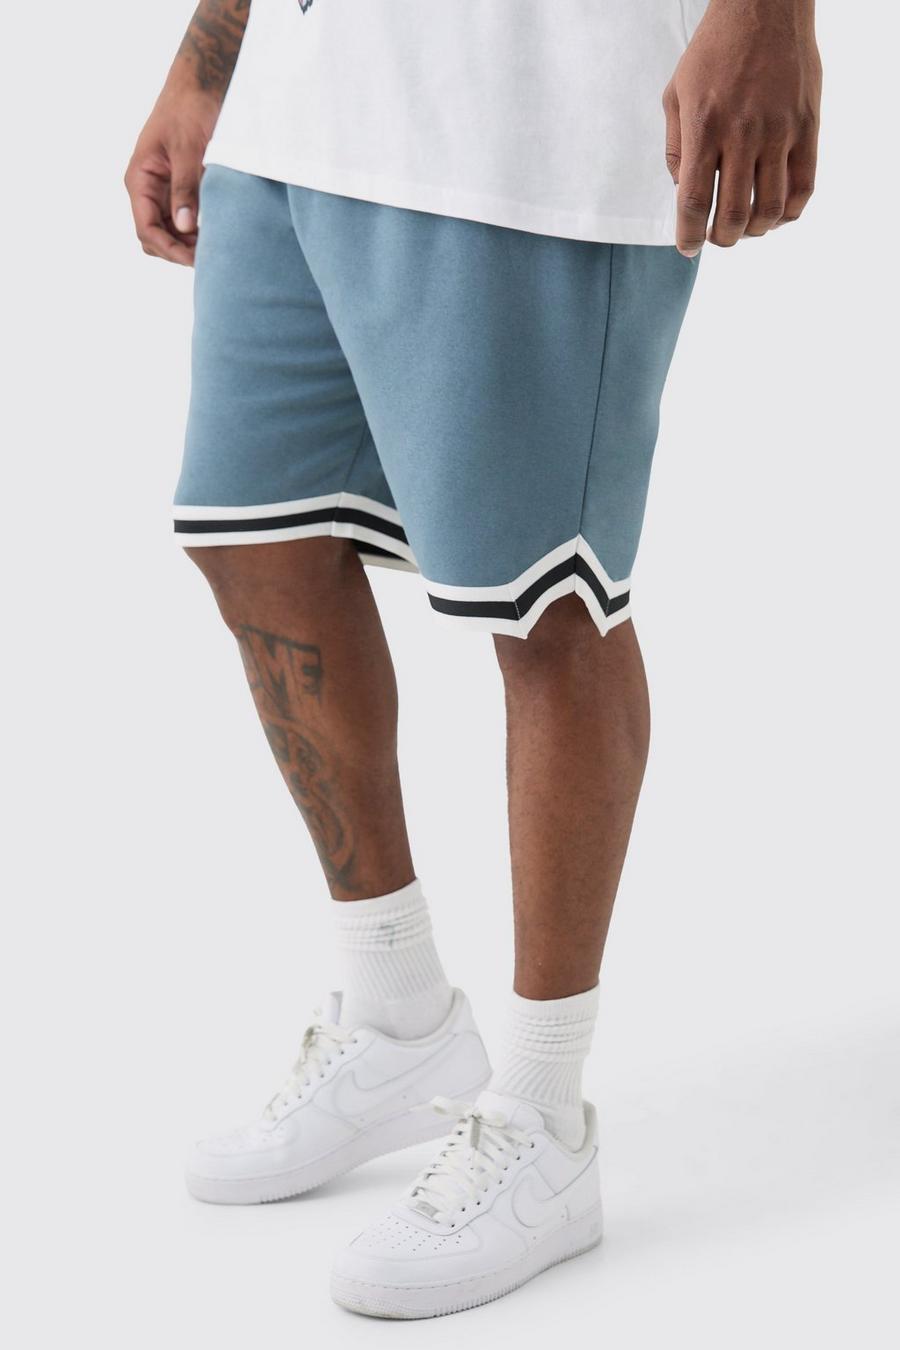 Pantalón corto Plus holgado de largo medio color pizarra estilo baloncesto, Slate image number 1